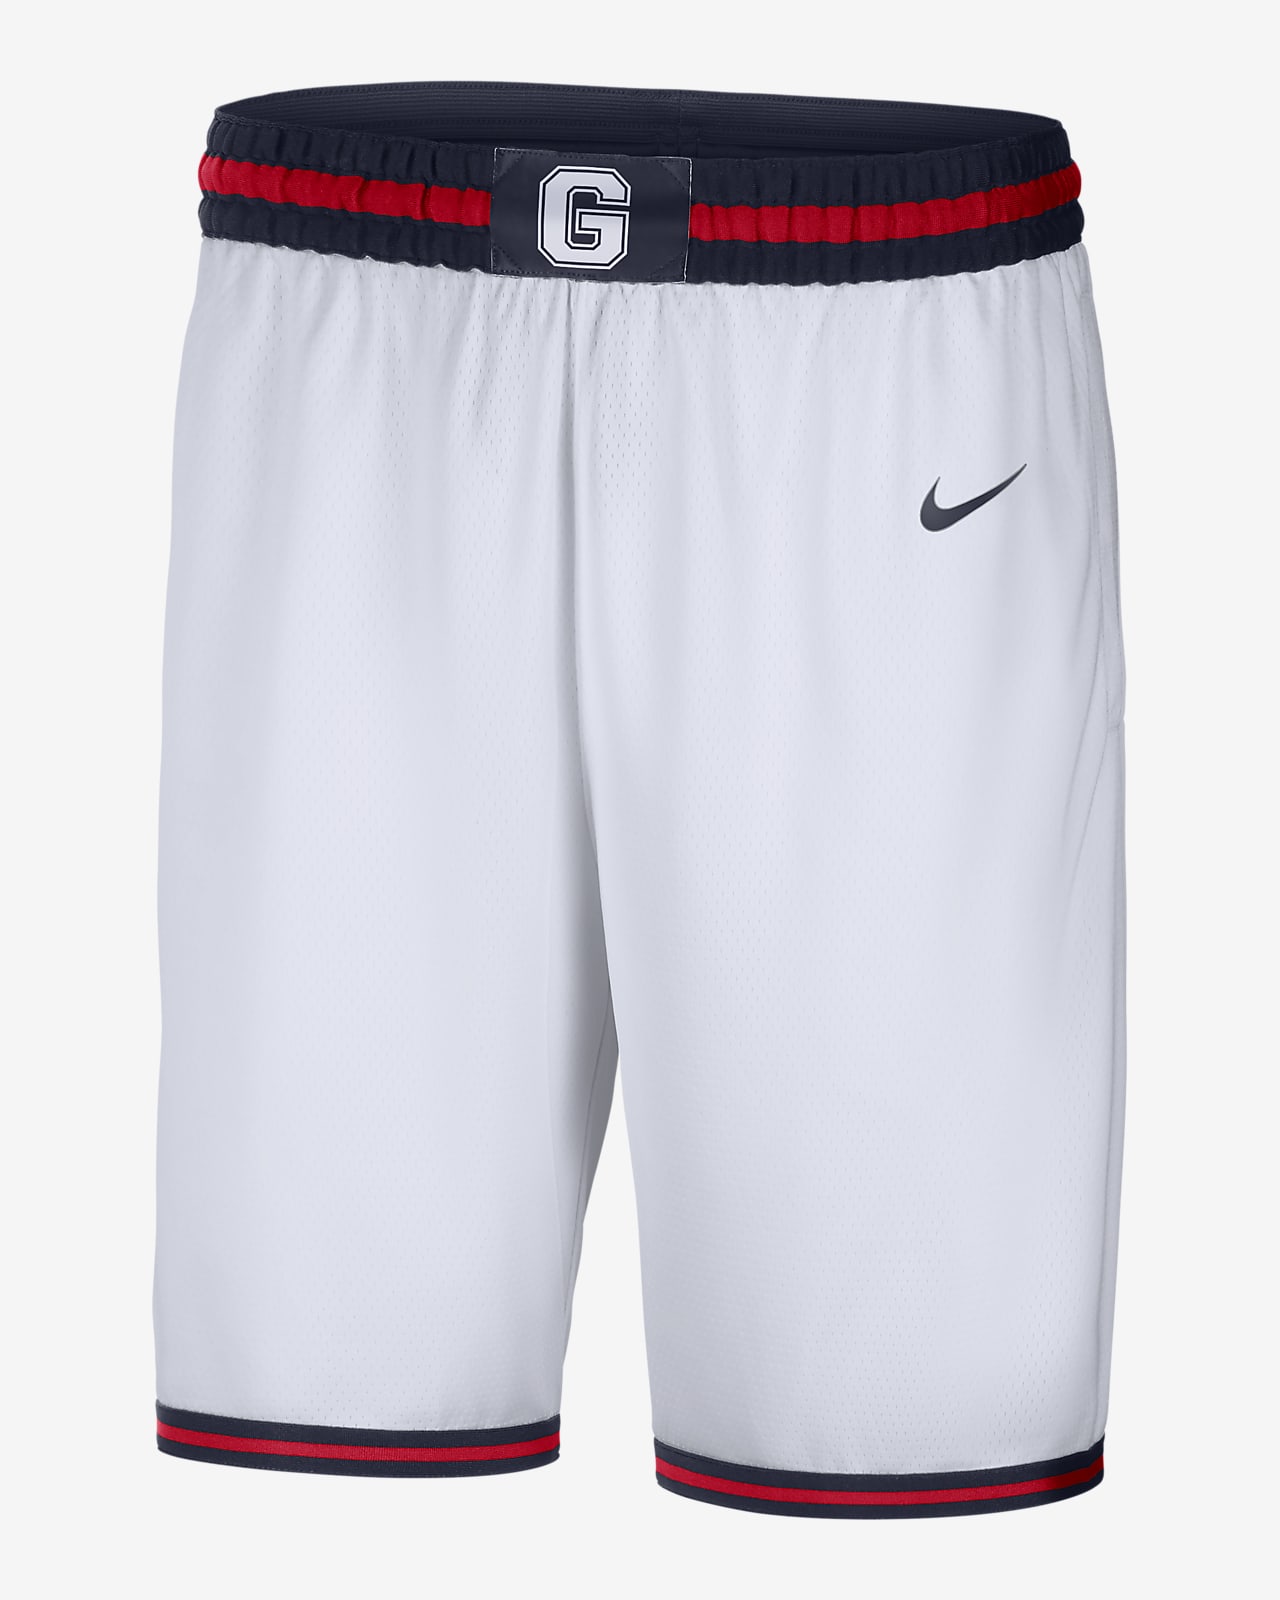 Gonzaga Limited Men's Nike Dri-FIT College Basketball Shorts